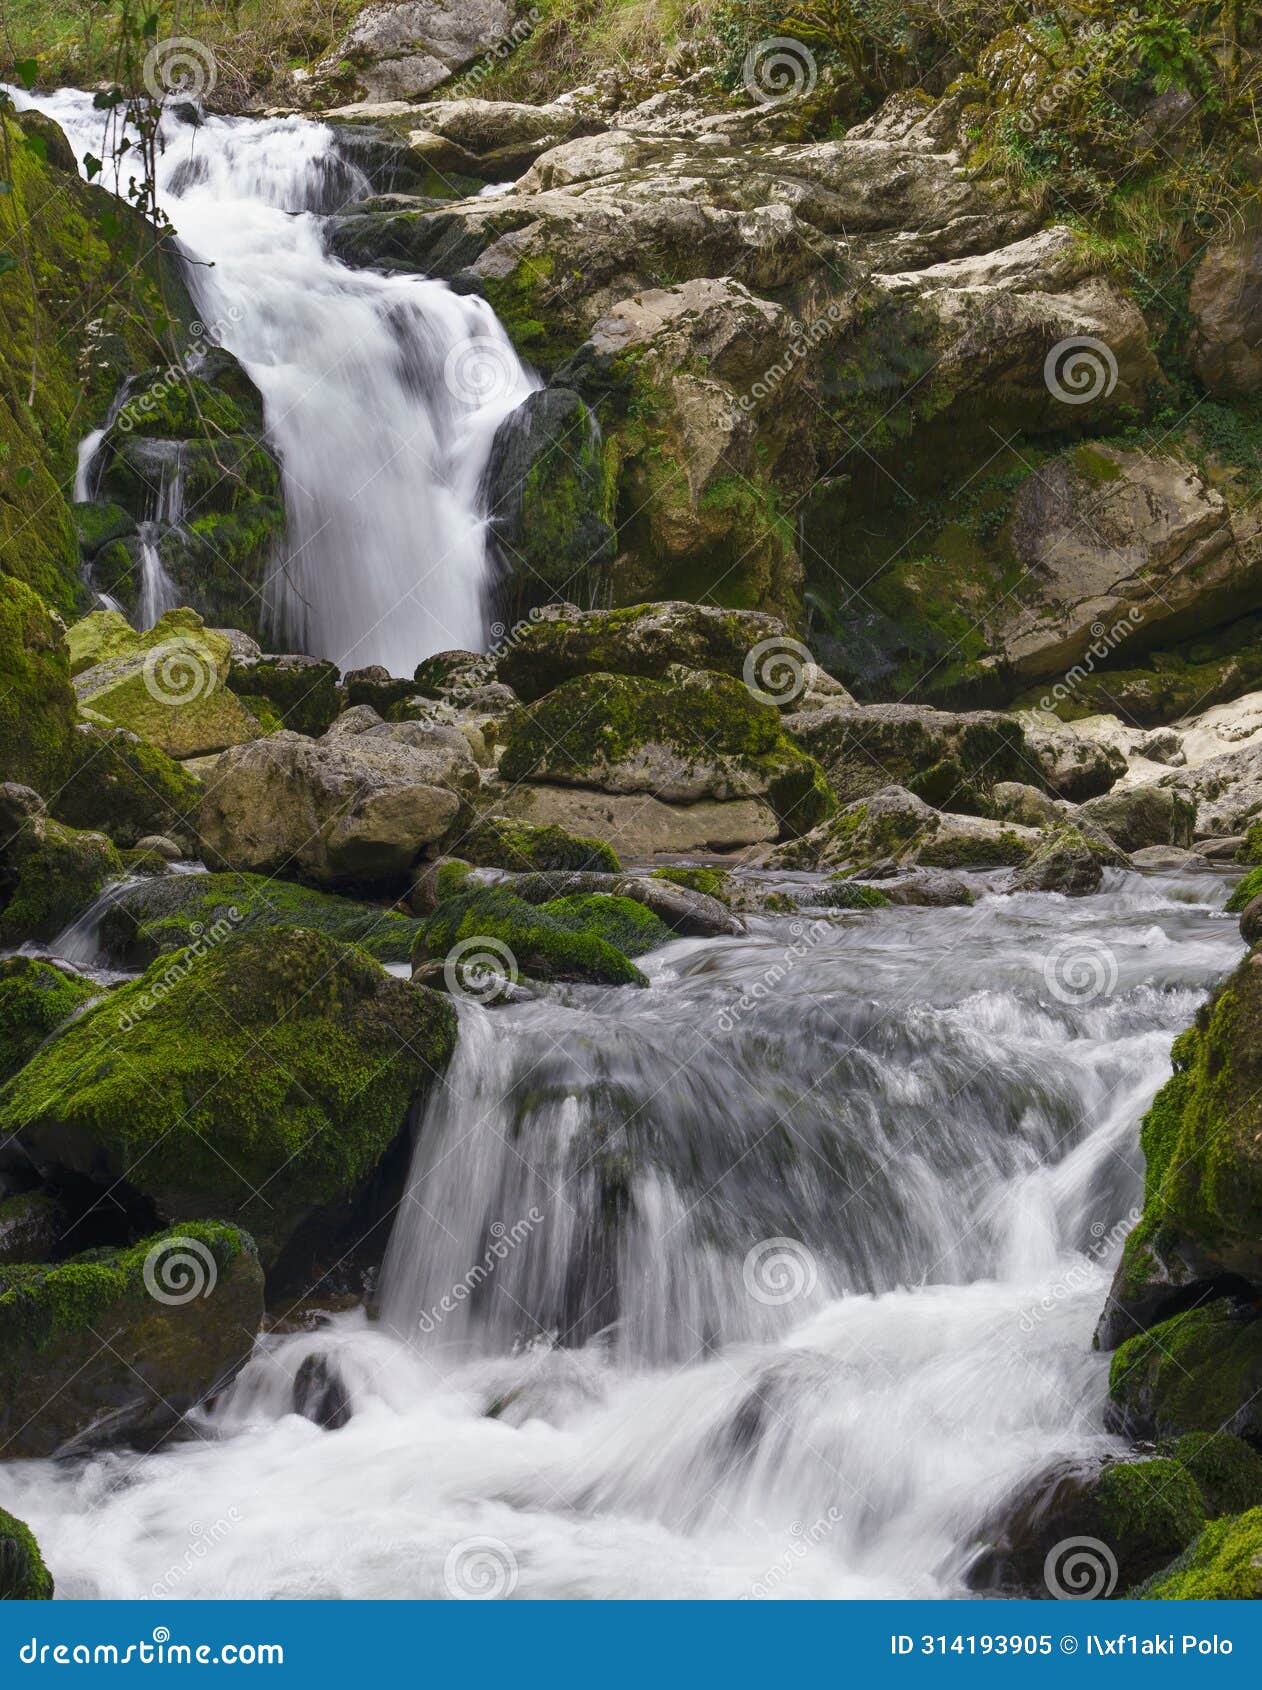 ixkier ur-jauzia. ixkier waterfall on the plazaola greenway, mugiro, navarra